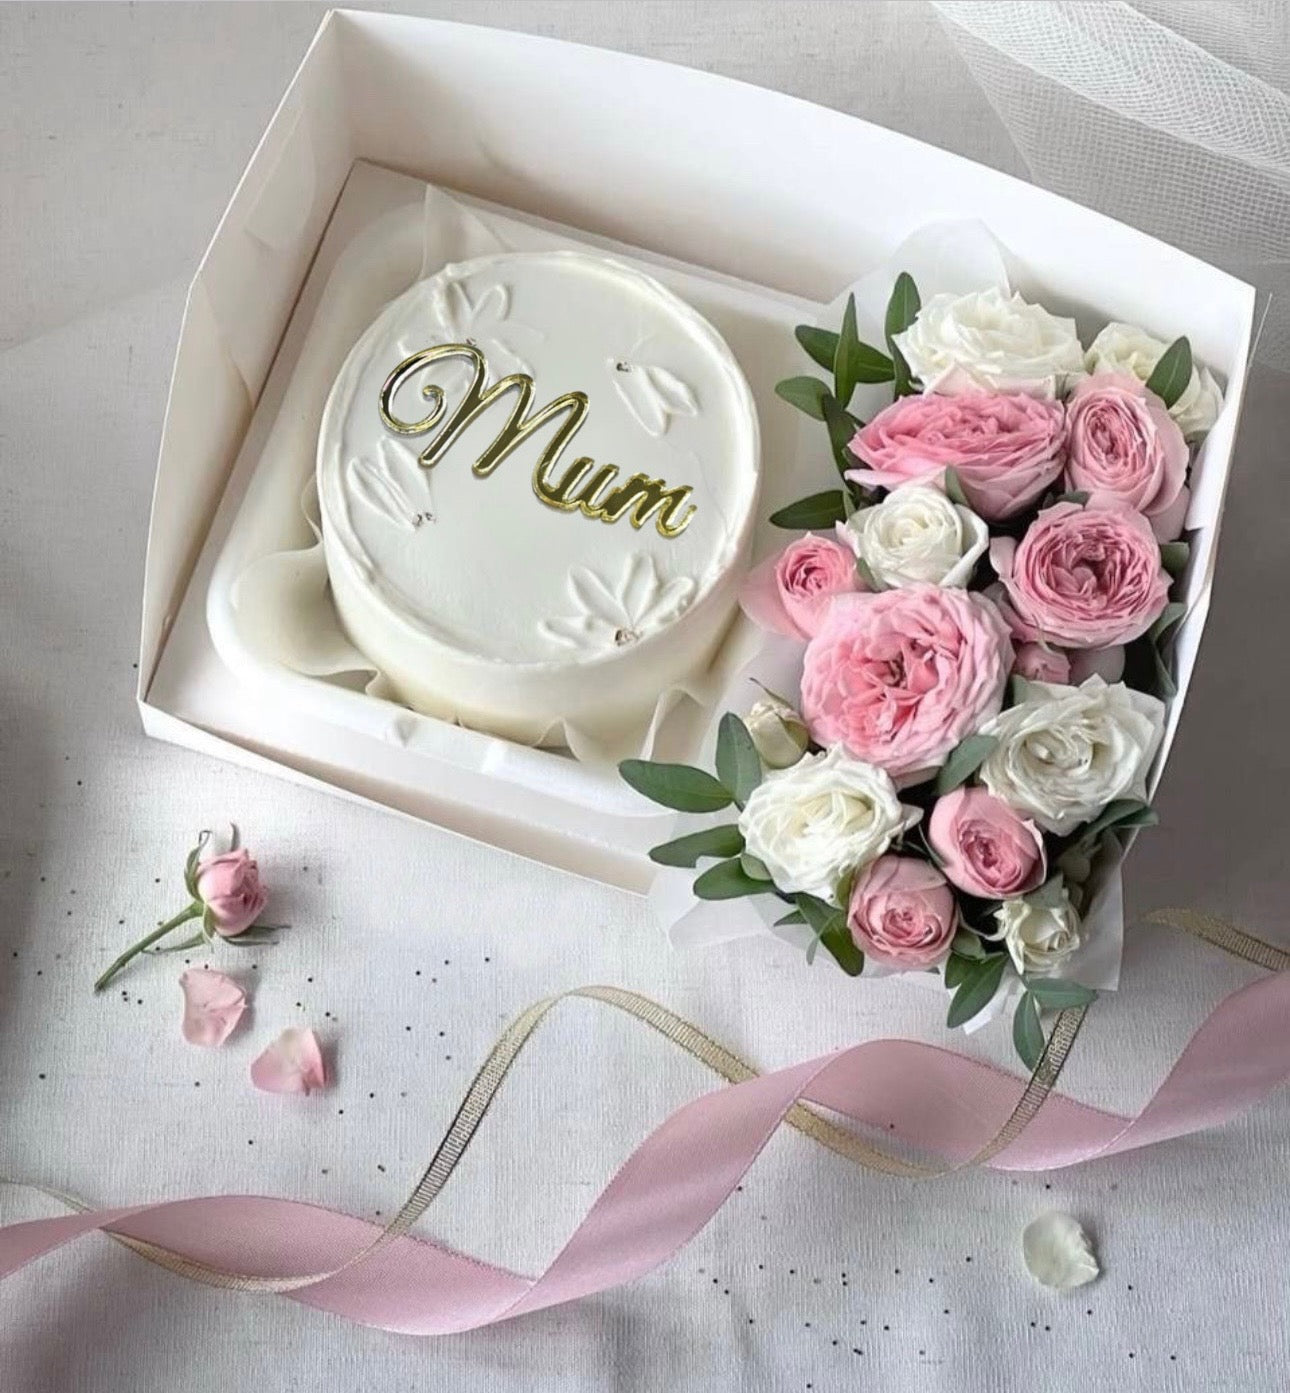 Mom bento cake A Lari Bakery x NovaPetal Limited Edition set